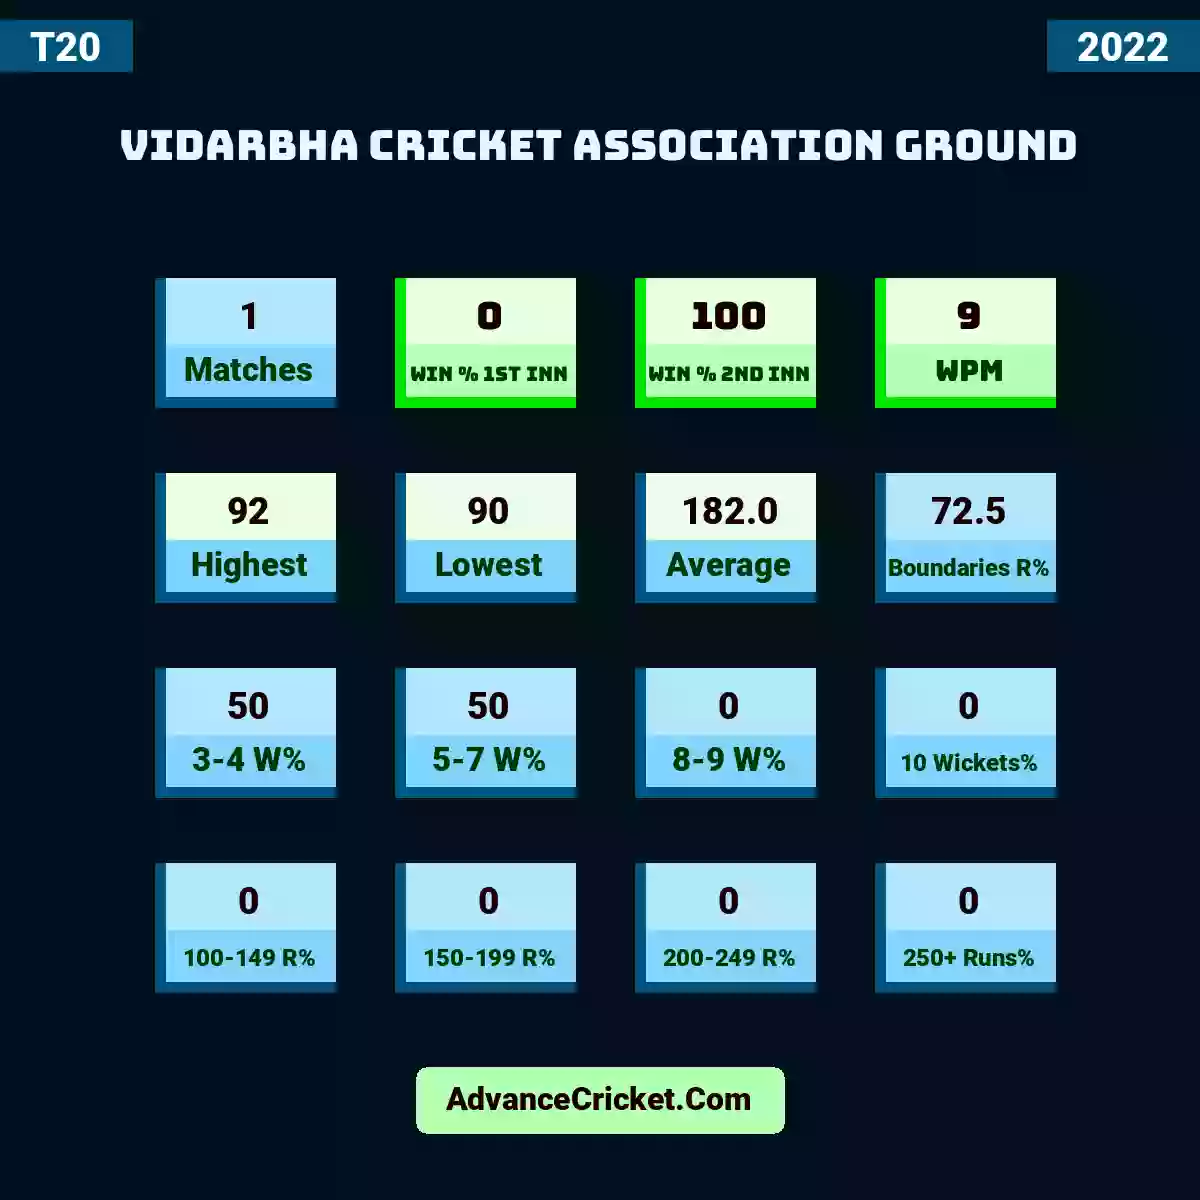 Image showing Vidarbha Cricket Association Ground with Matches: 1, Win % 1st Inn: 0, Win % 2nd Inn: 100, WPM: 9, Highest: 92, Lowest: 90, Average: 182.0, Boundaries R%: 72.5, 3-4 W%: 50, 5-7 W%: 50, 8-9 W%: 0, 10 Wickets%: 0, 100-149 R%: 0, 150-199 R%: 0, 200-249 R%: 0, 250+ Runs%: 0.